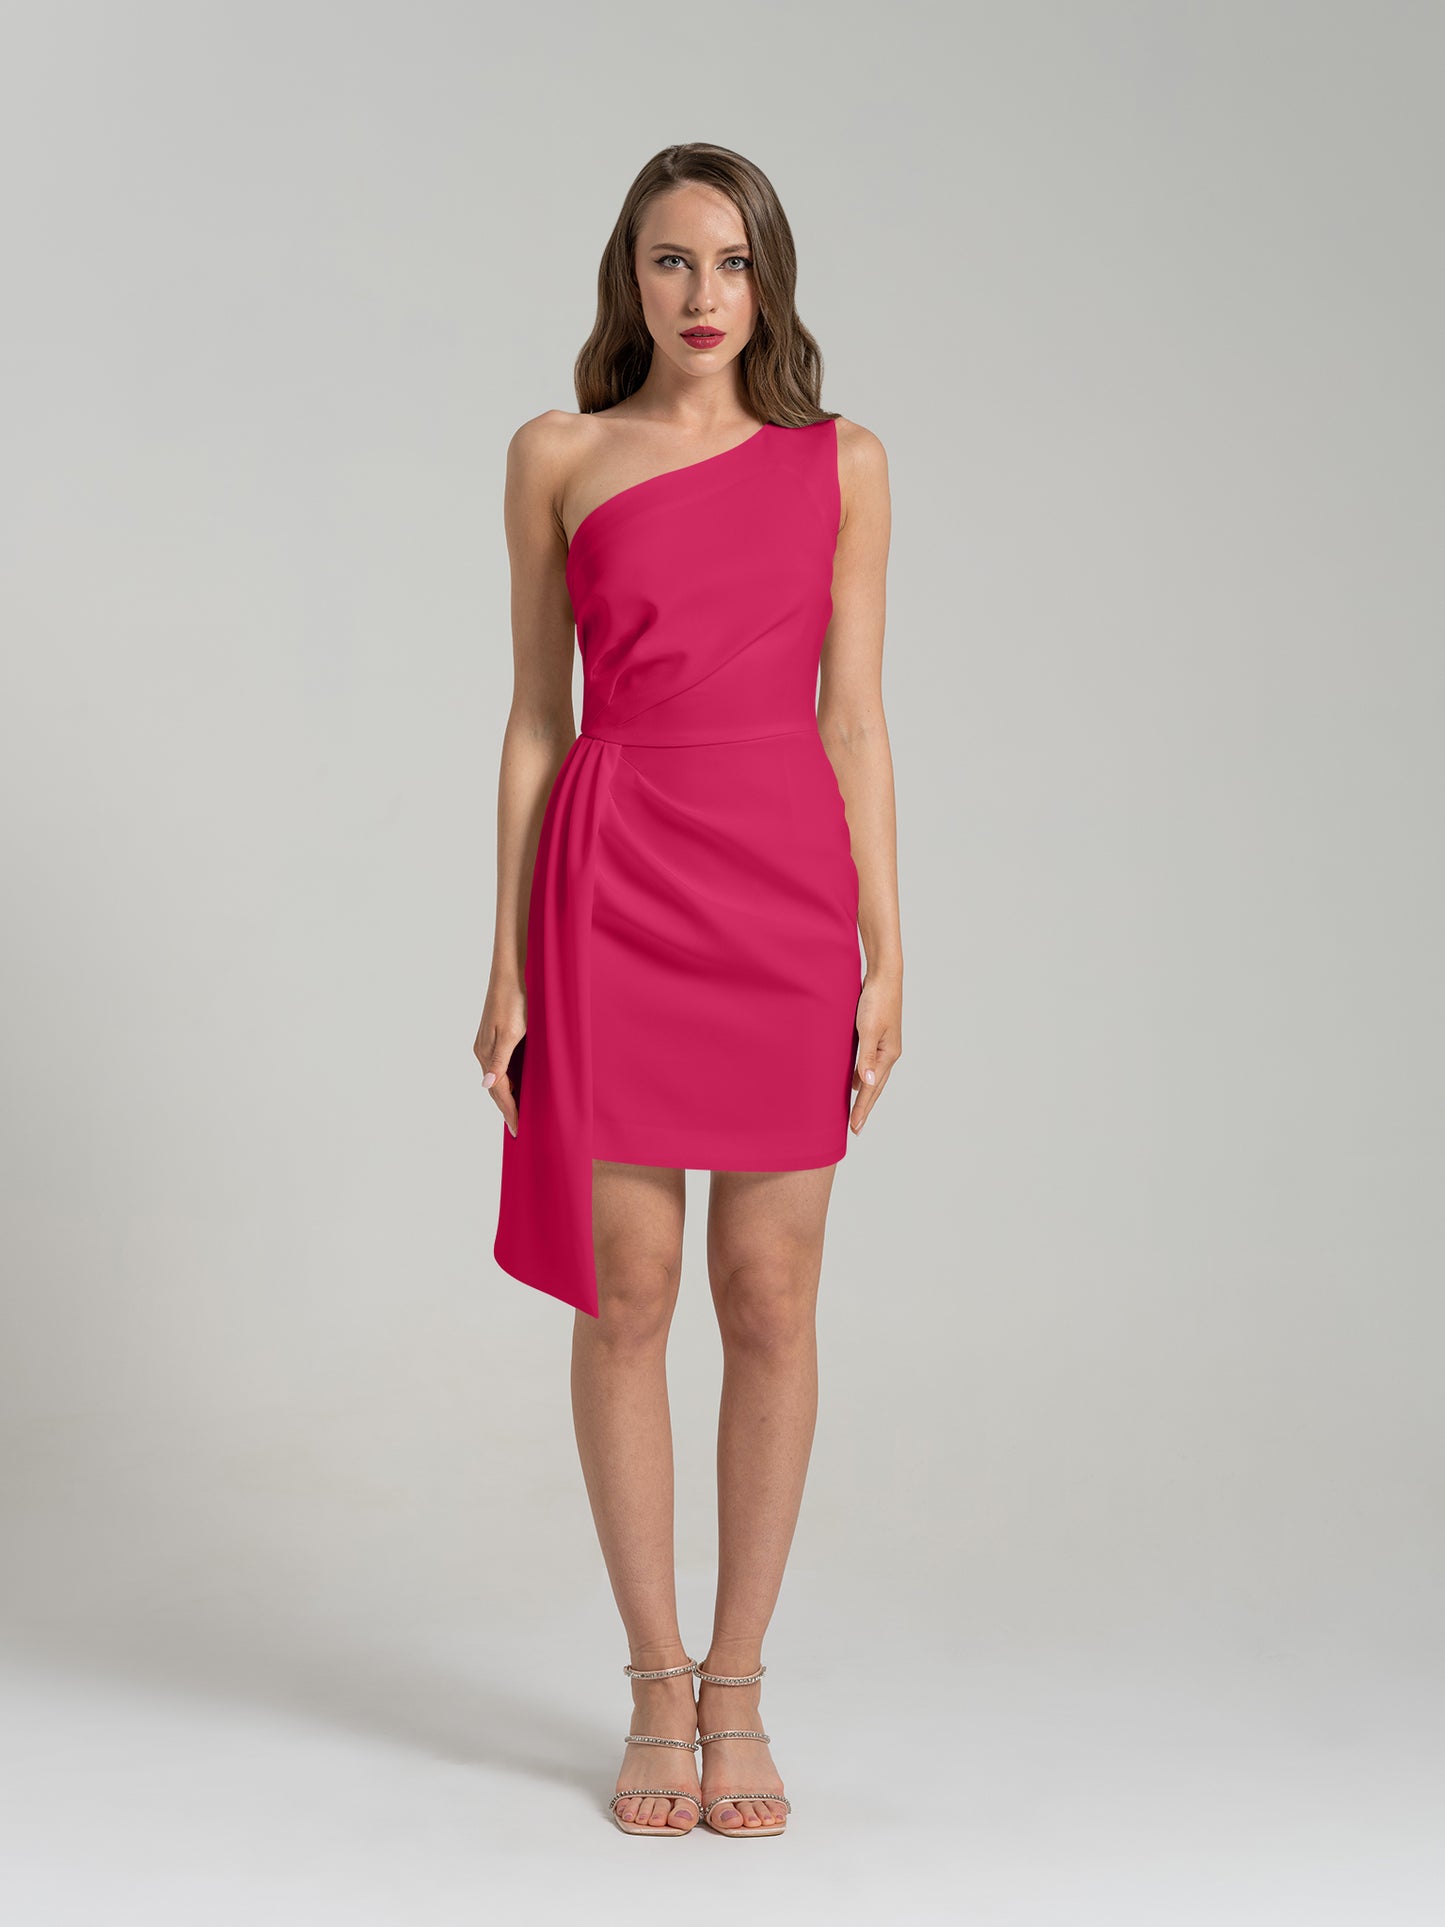 Iconic Glamour Short Dress - Hot Pink